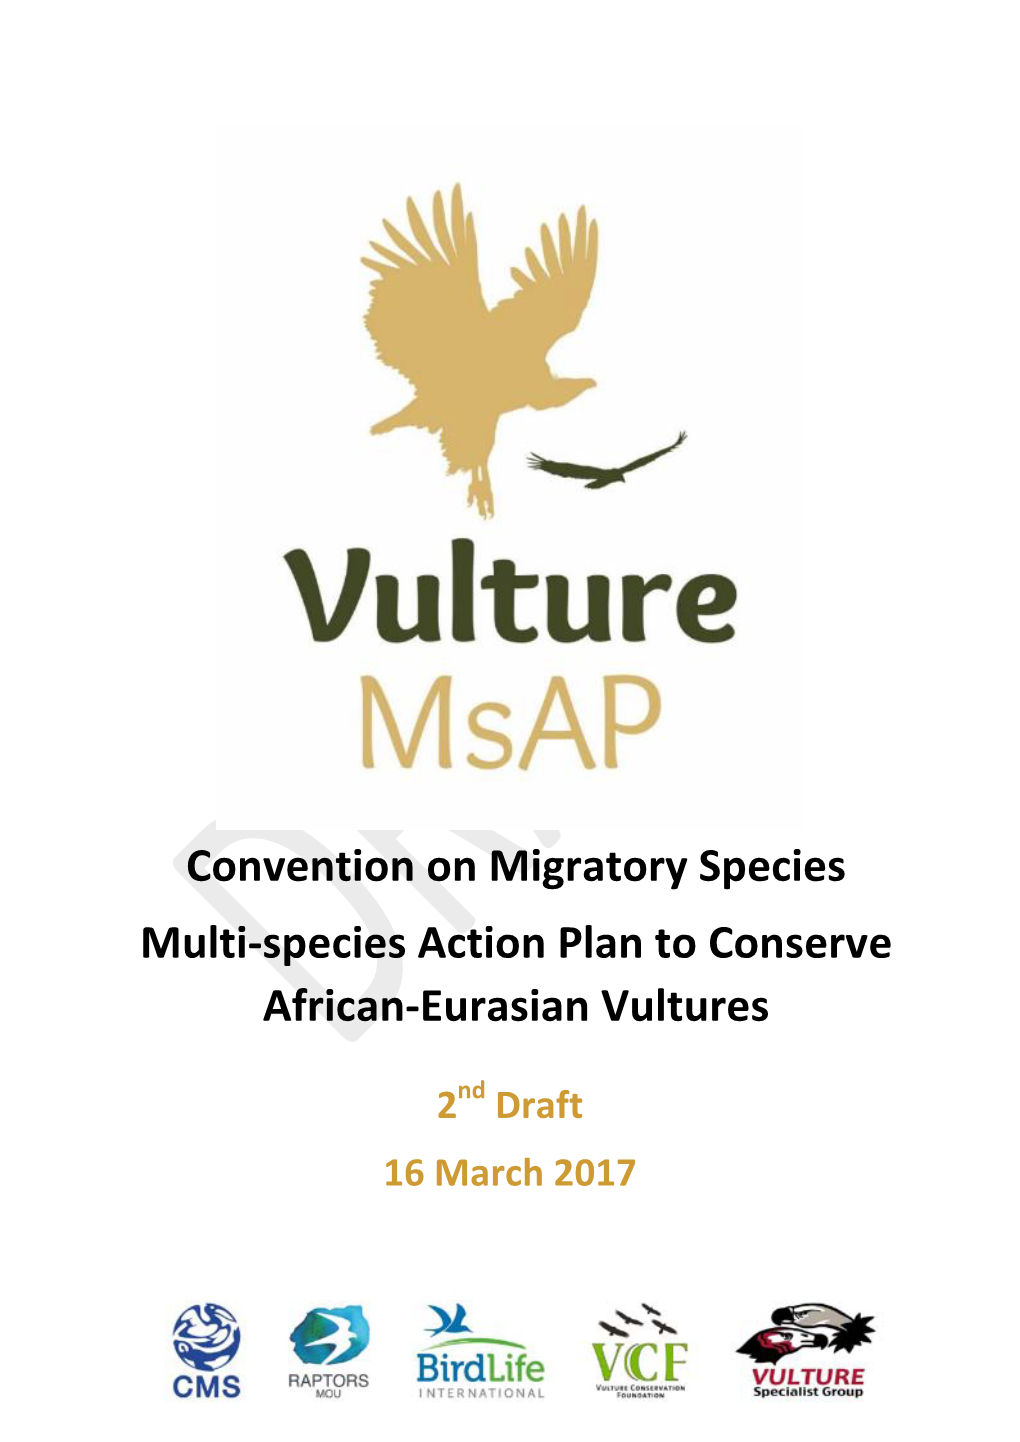 Vulture Msap • Jun-Aug 2016 – Appointment of Overarching and Regional Coordinators • October 2016 – African Regional Workshop in Dakar, Senegal